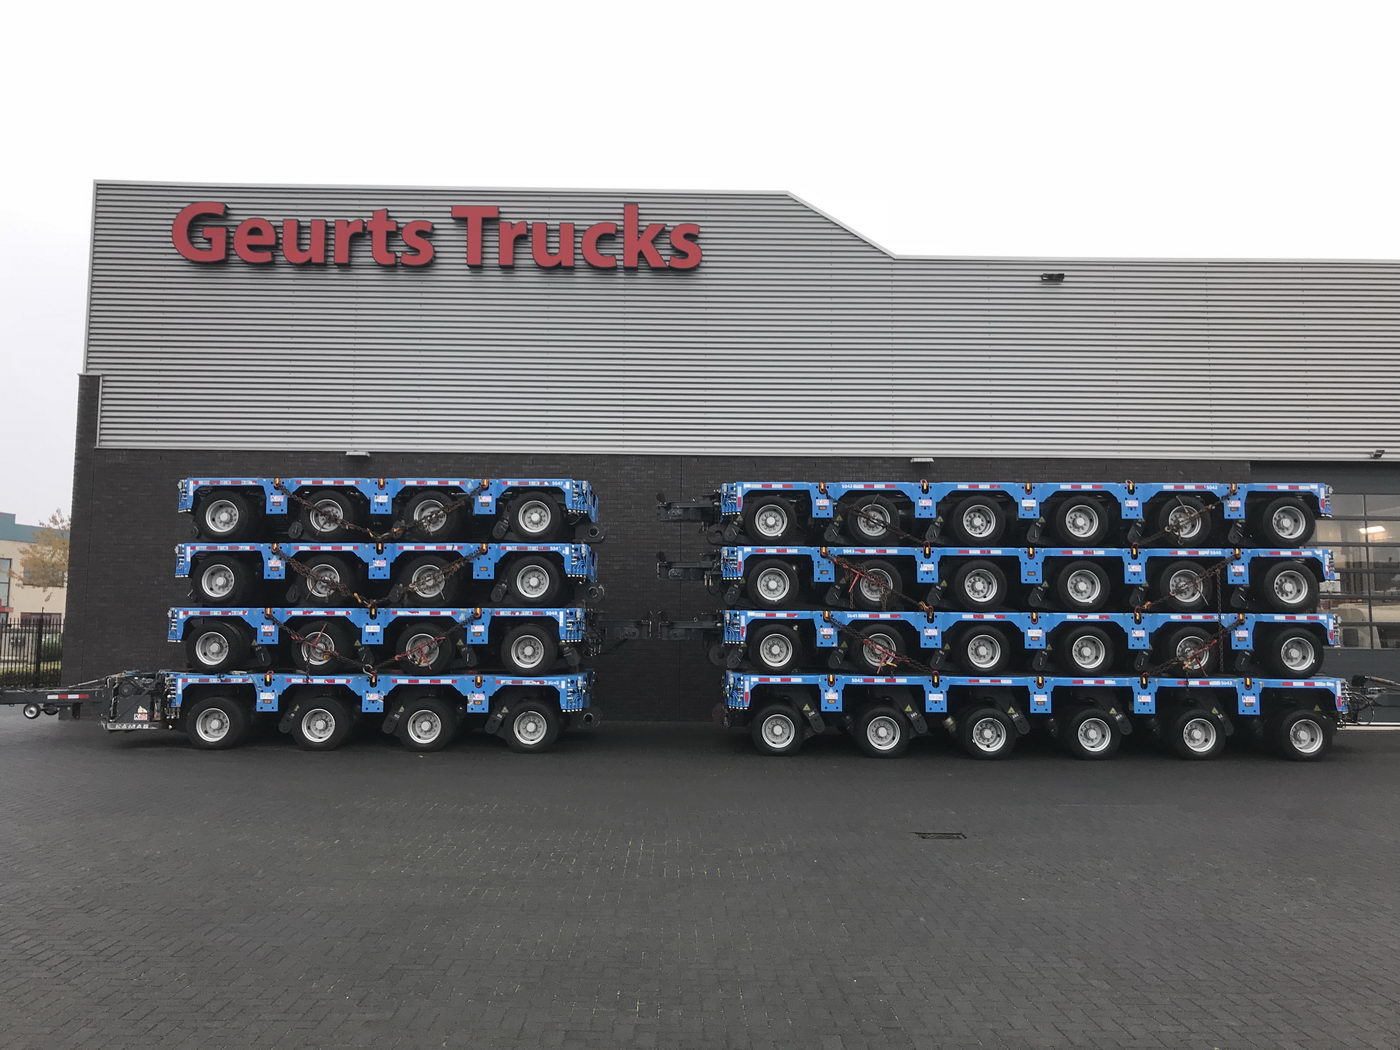 Geurts Trucks B.V. undefined: kuva Geurts Trucks B.V. undefined